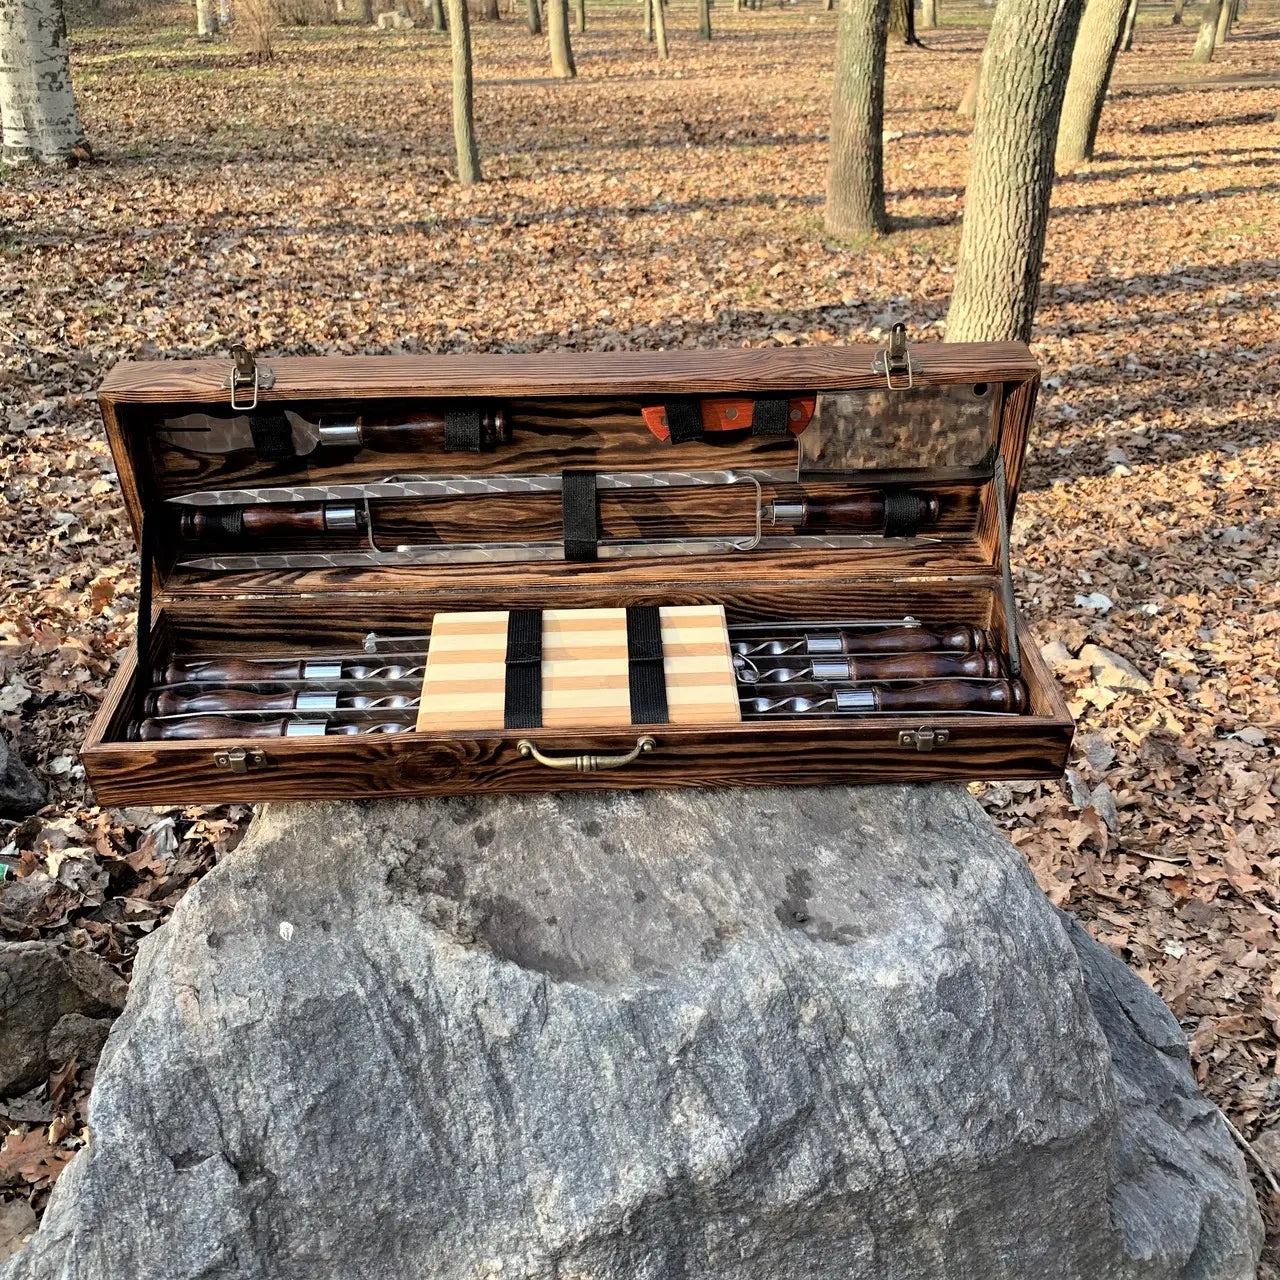 Grilled Kabobs Backyard BBQ Skewers Set “Tiger” Tiger In a Wooden Case, 13 item